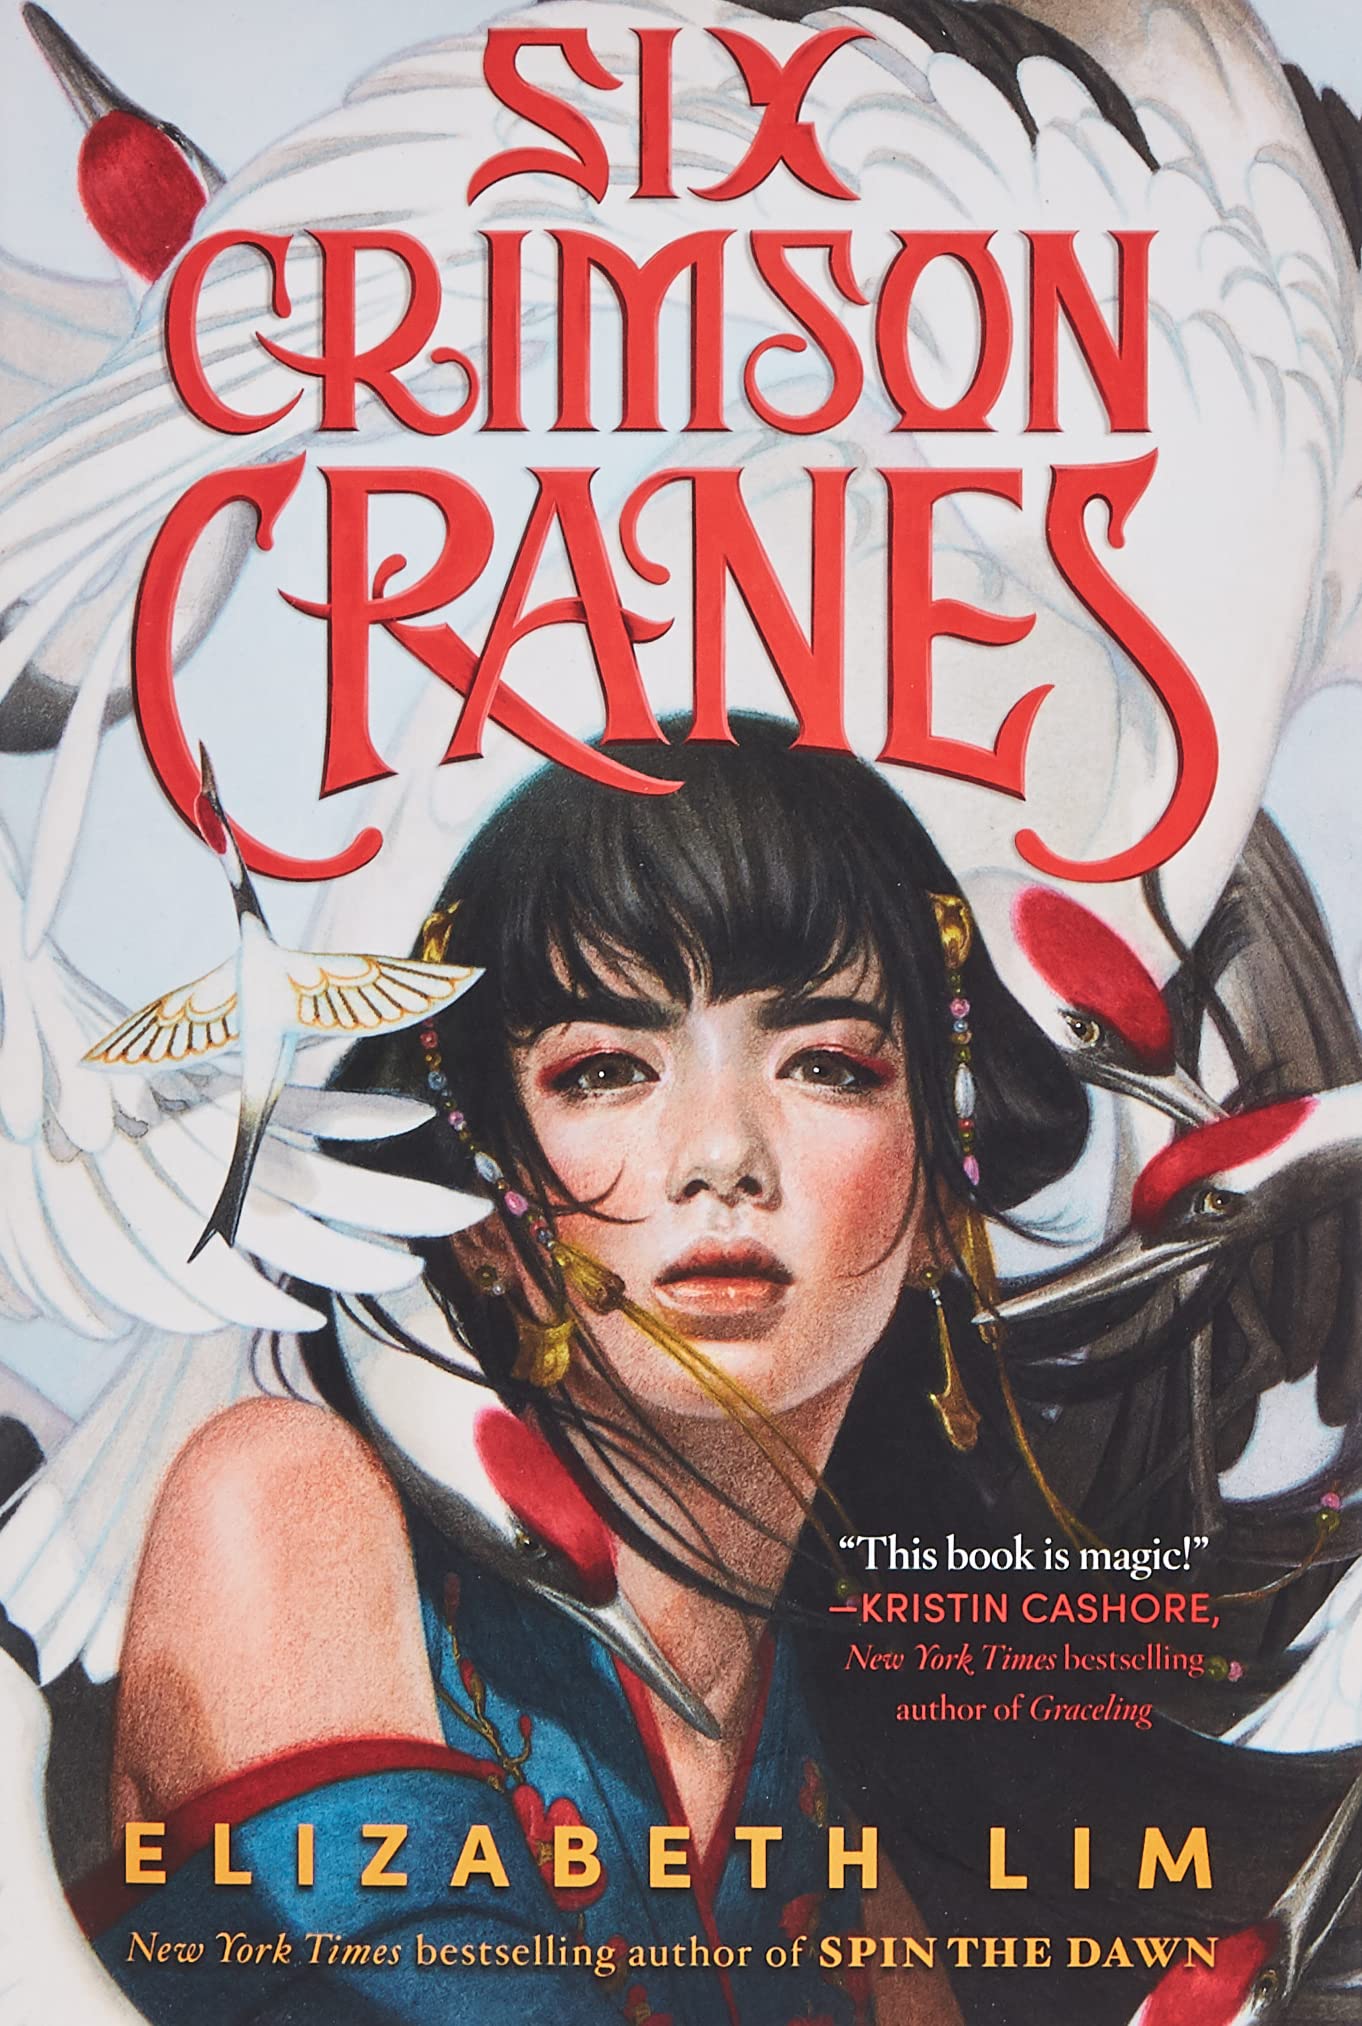 Six Crimson Cranes Hardcover by Elizabeth Lim